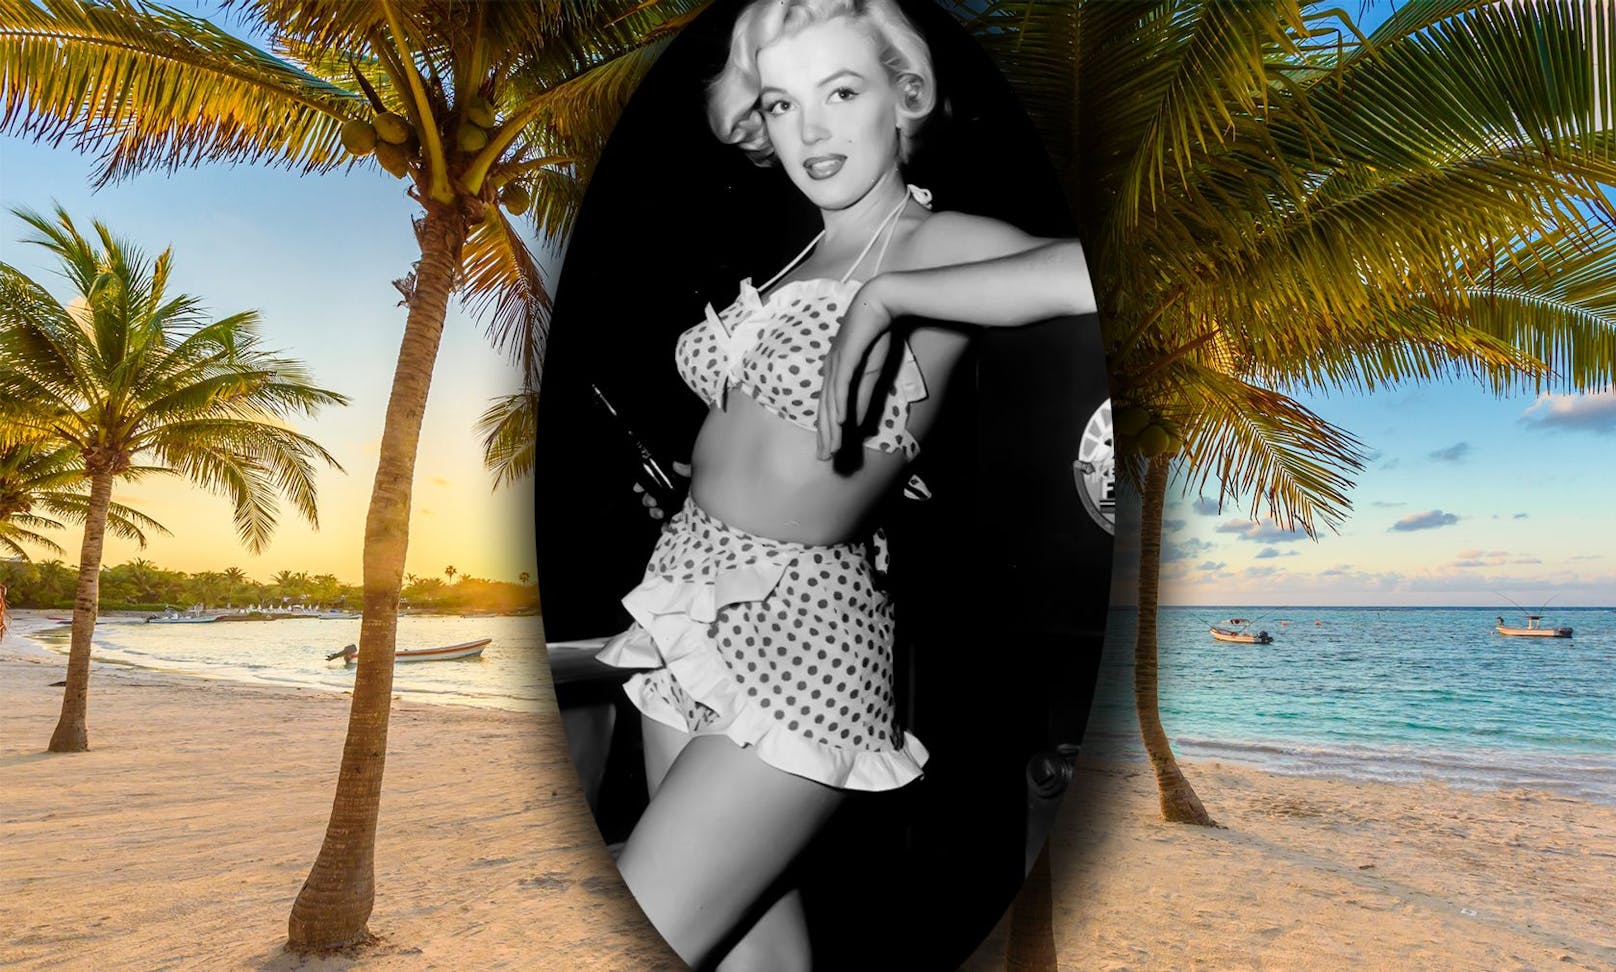 An den Strand wie Marilyn - "Gingham"-Bikini steht dir